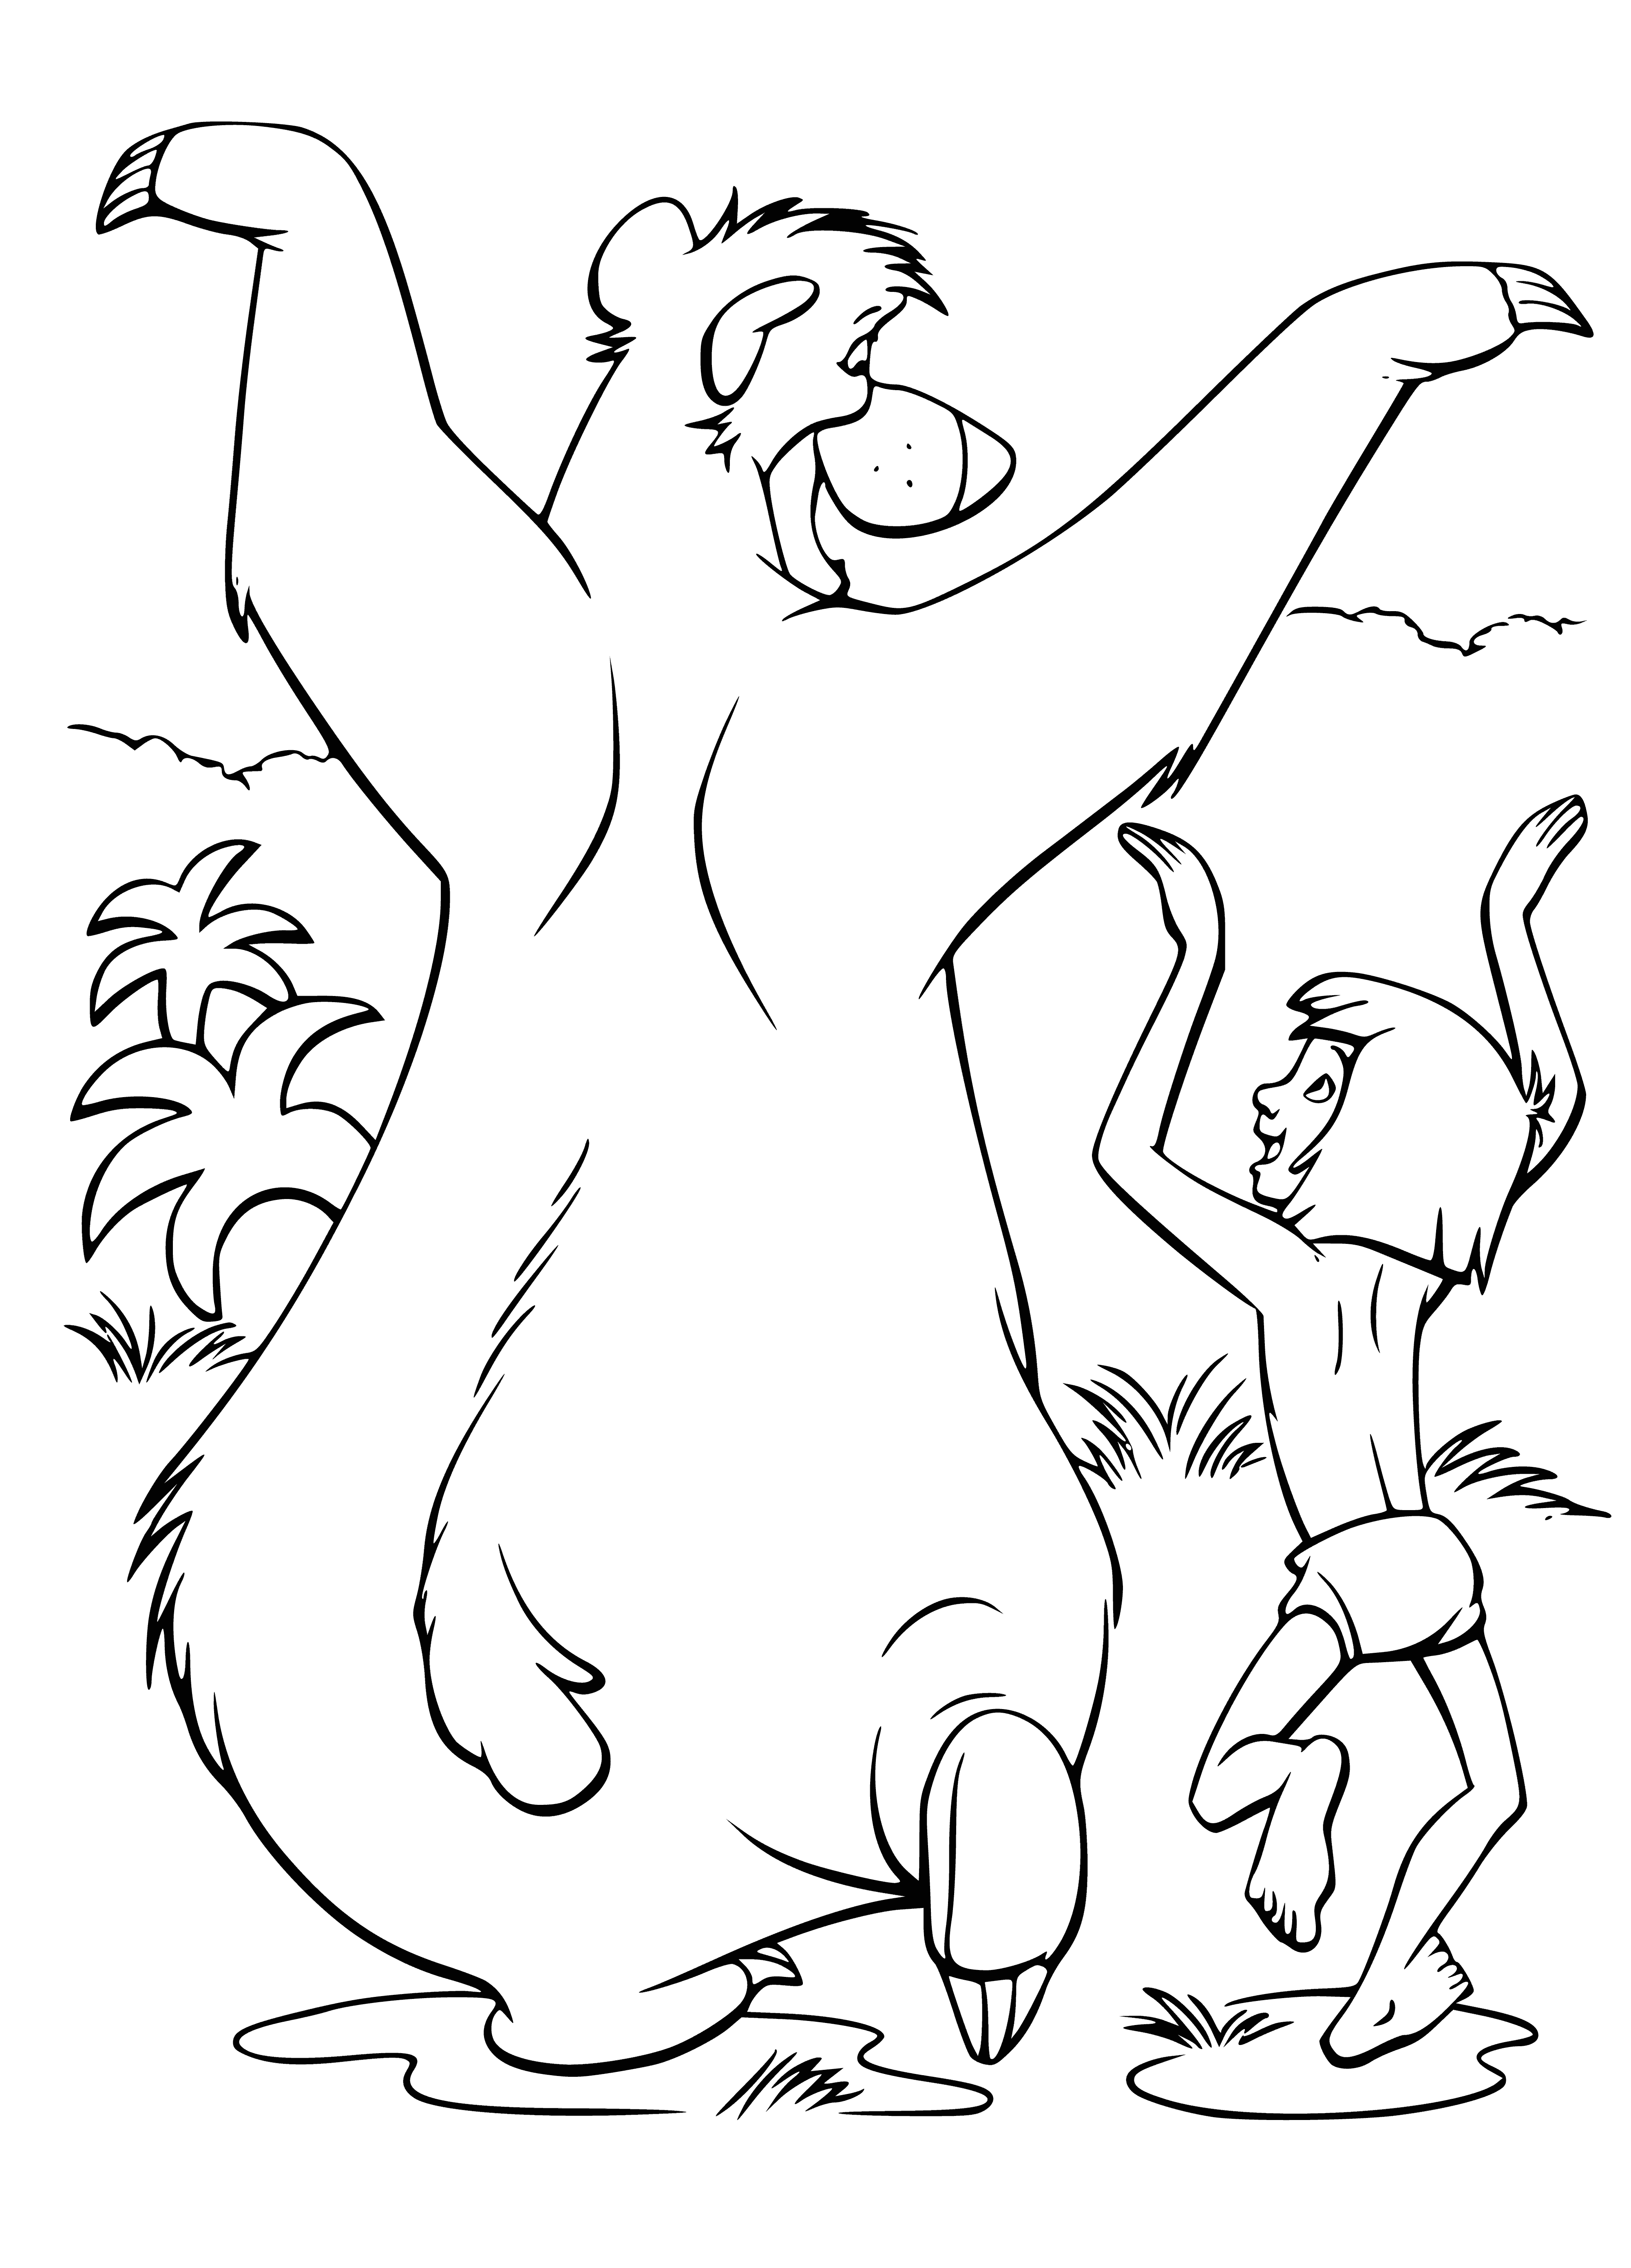 Baloo and Mowgli coloring page